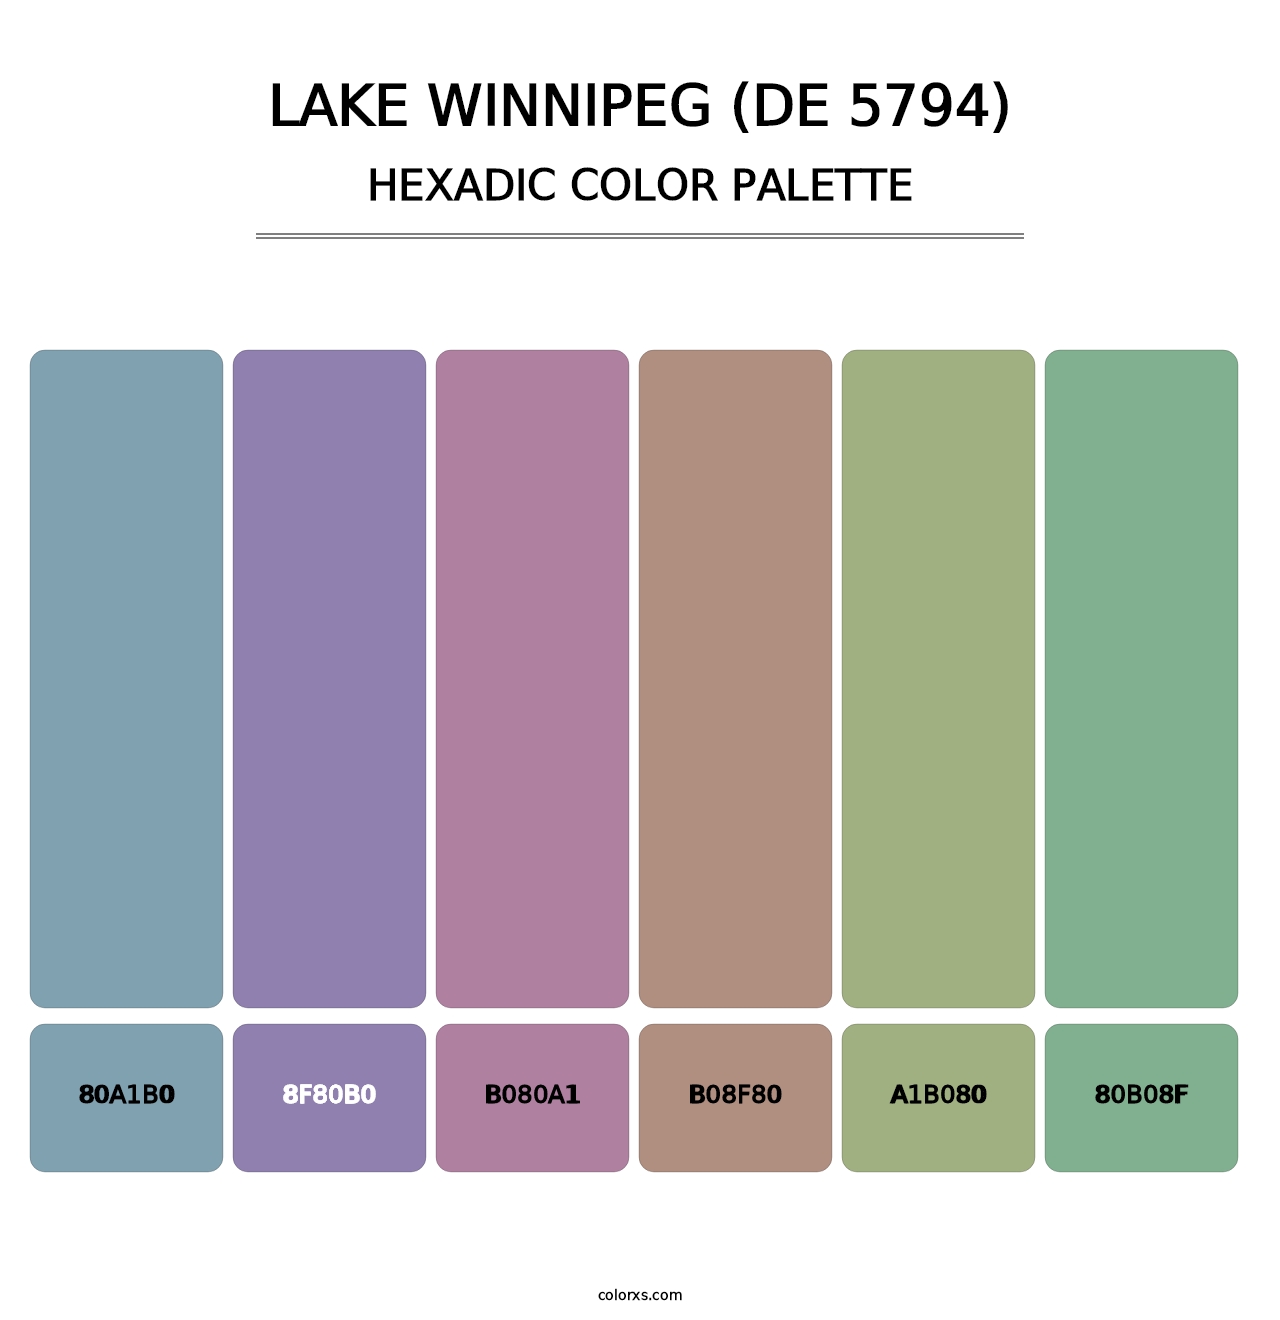 Lake Winnipeg (DE 5794) - Hexadic Color Palette